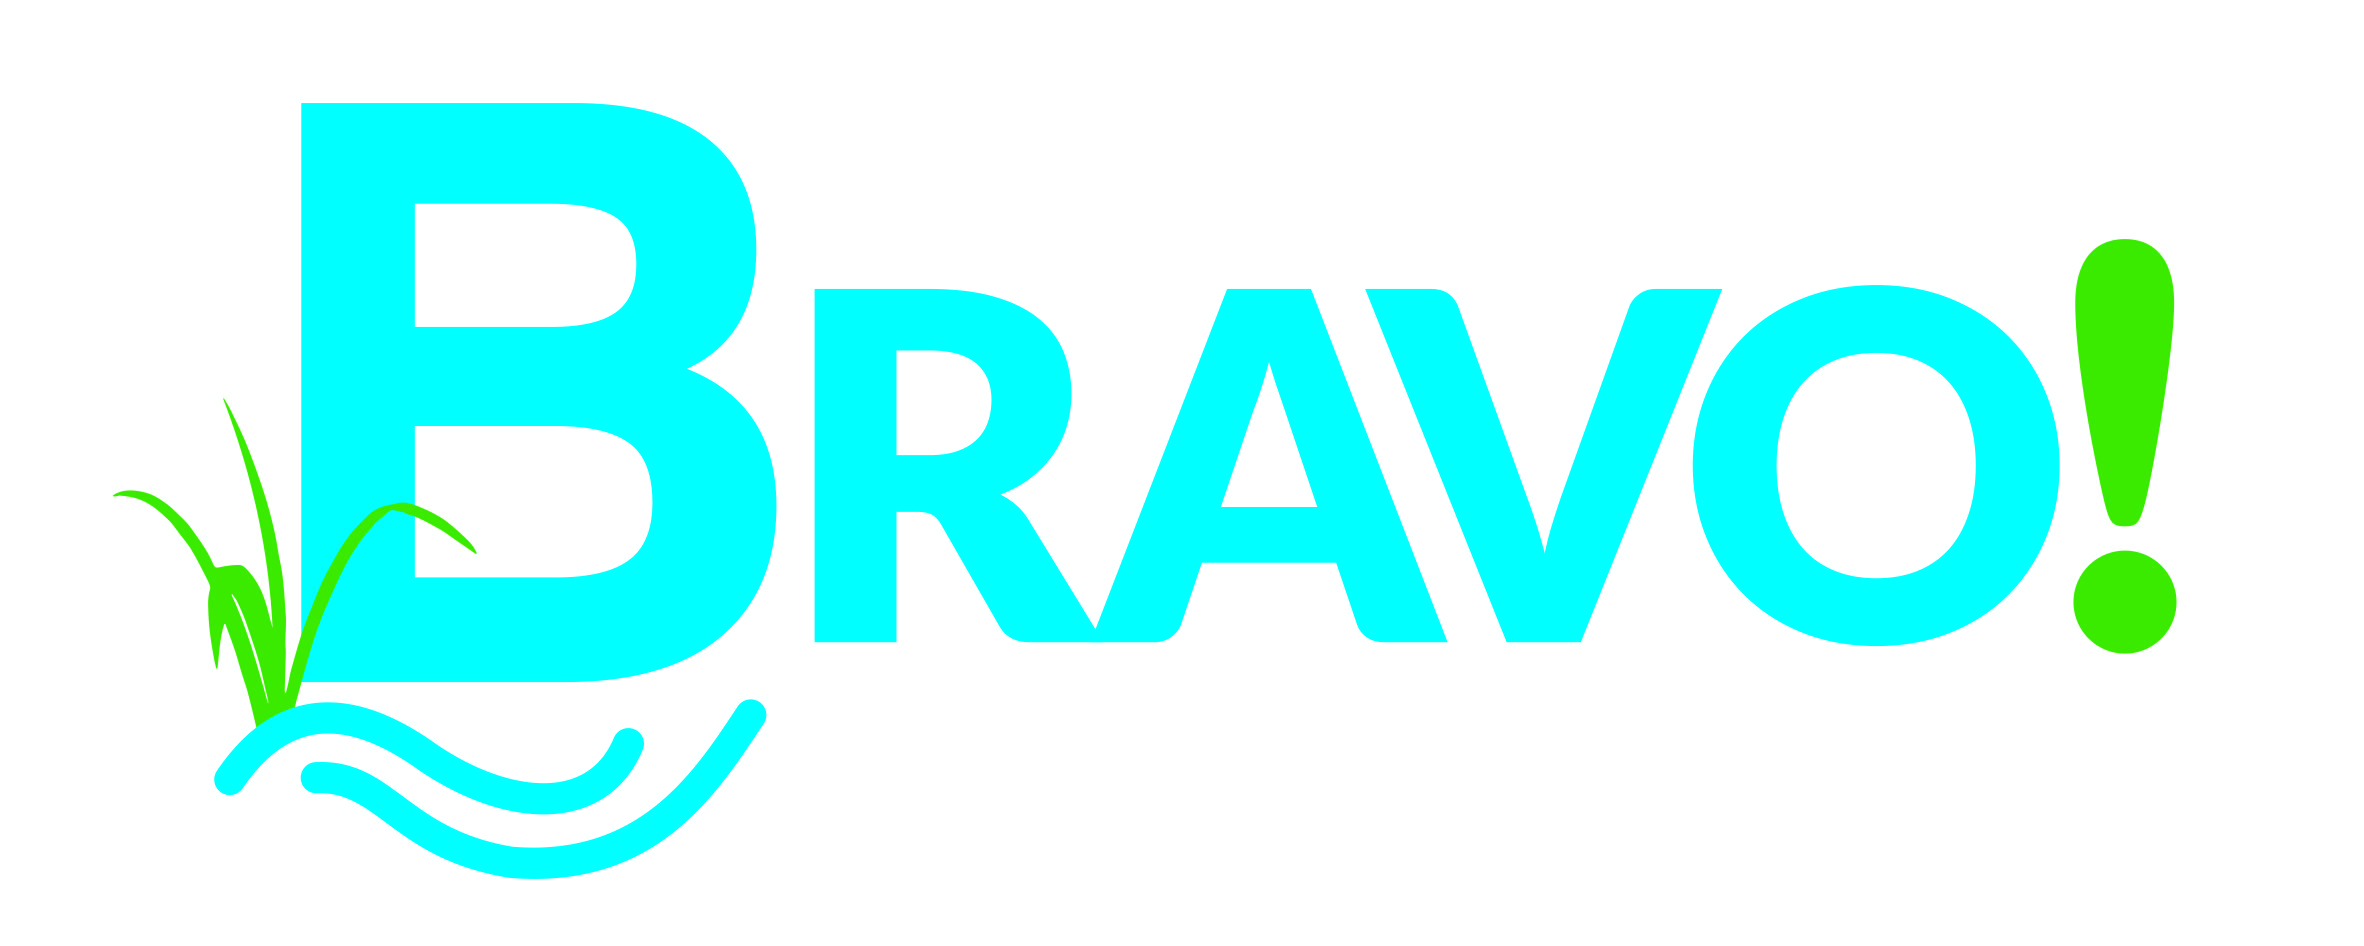 Wikvereniging Bravo